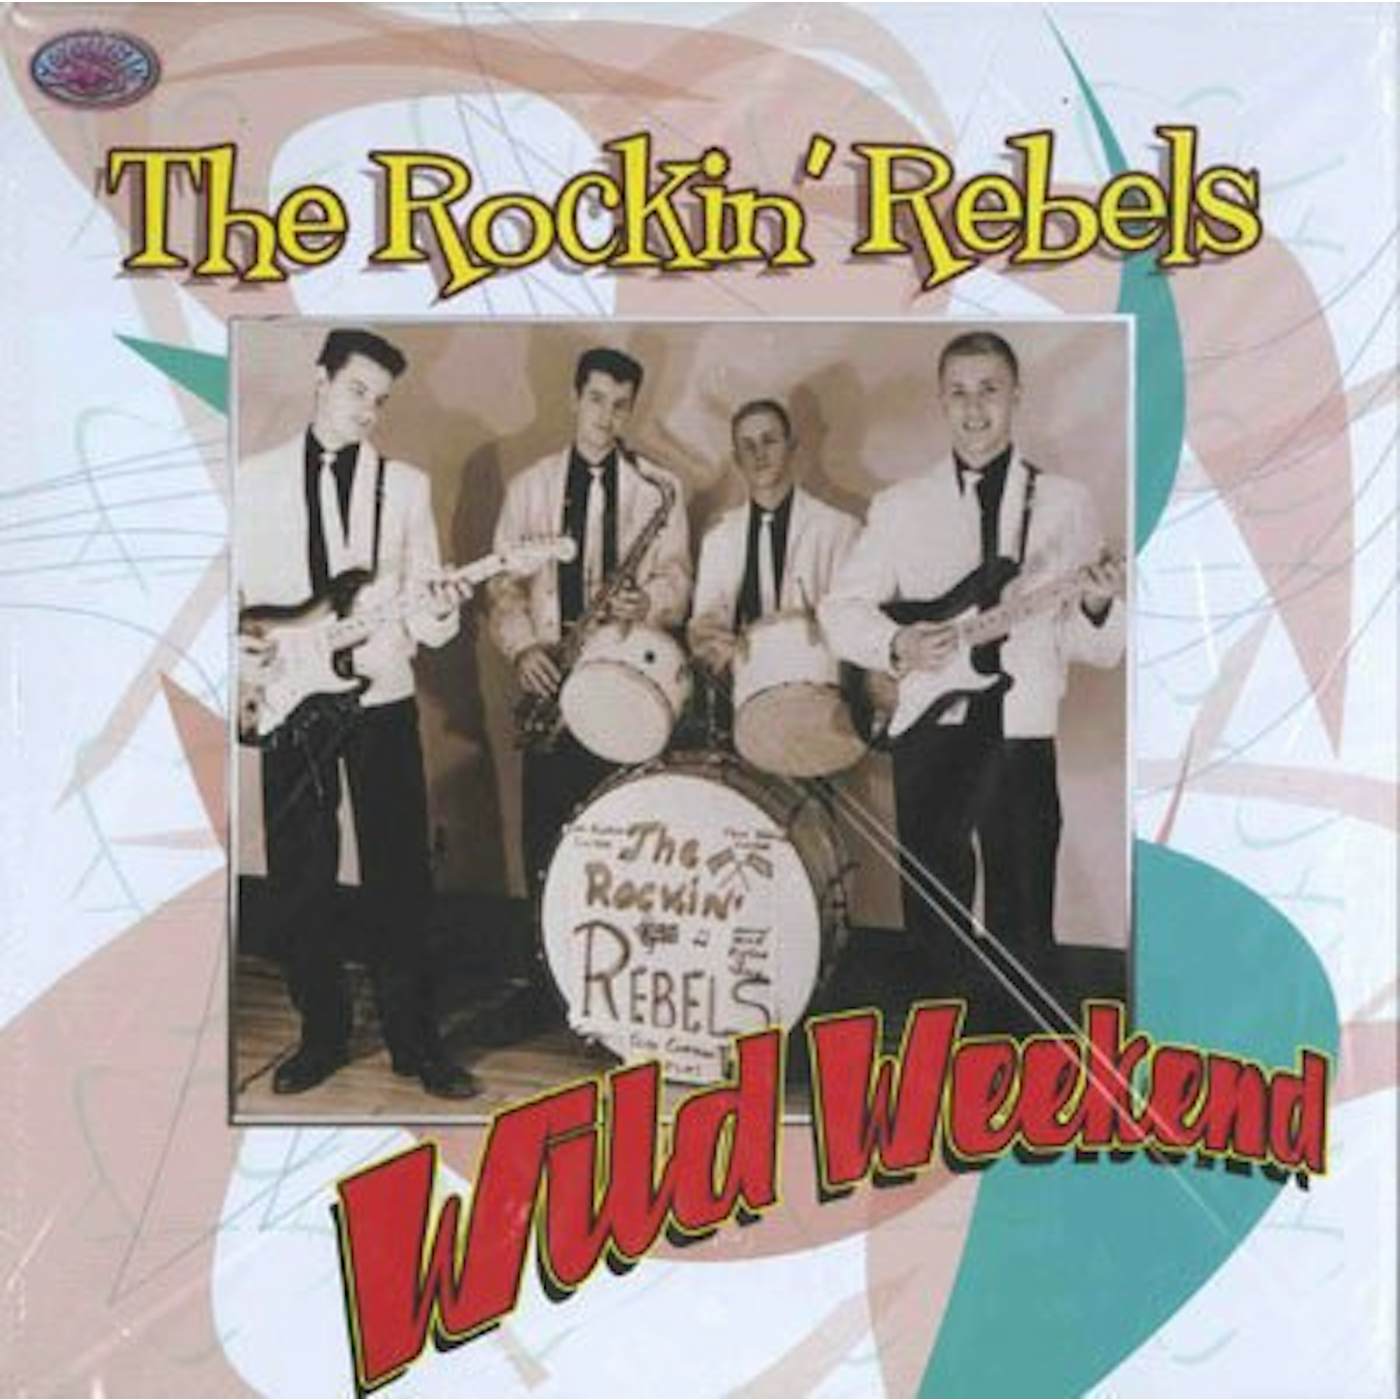 Rockin Rebels Wild Weekend Vinyl Record